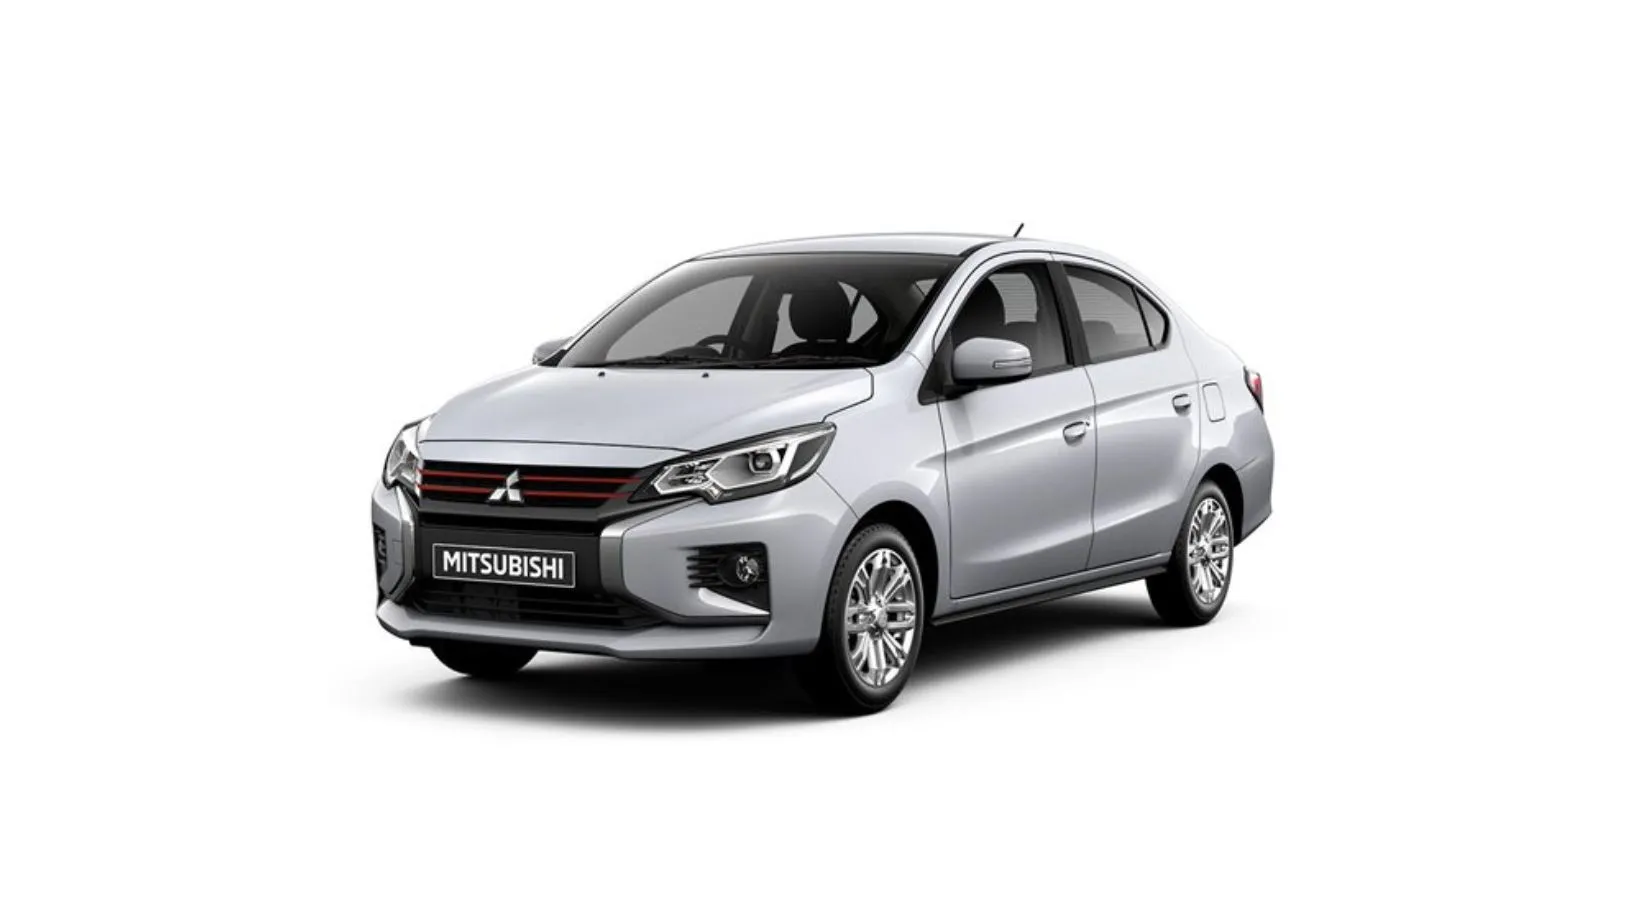 Mitsubishi Attrage Price in Sri Lanka